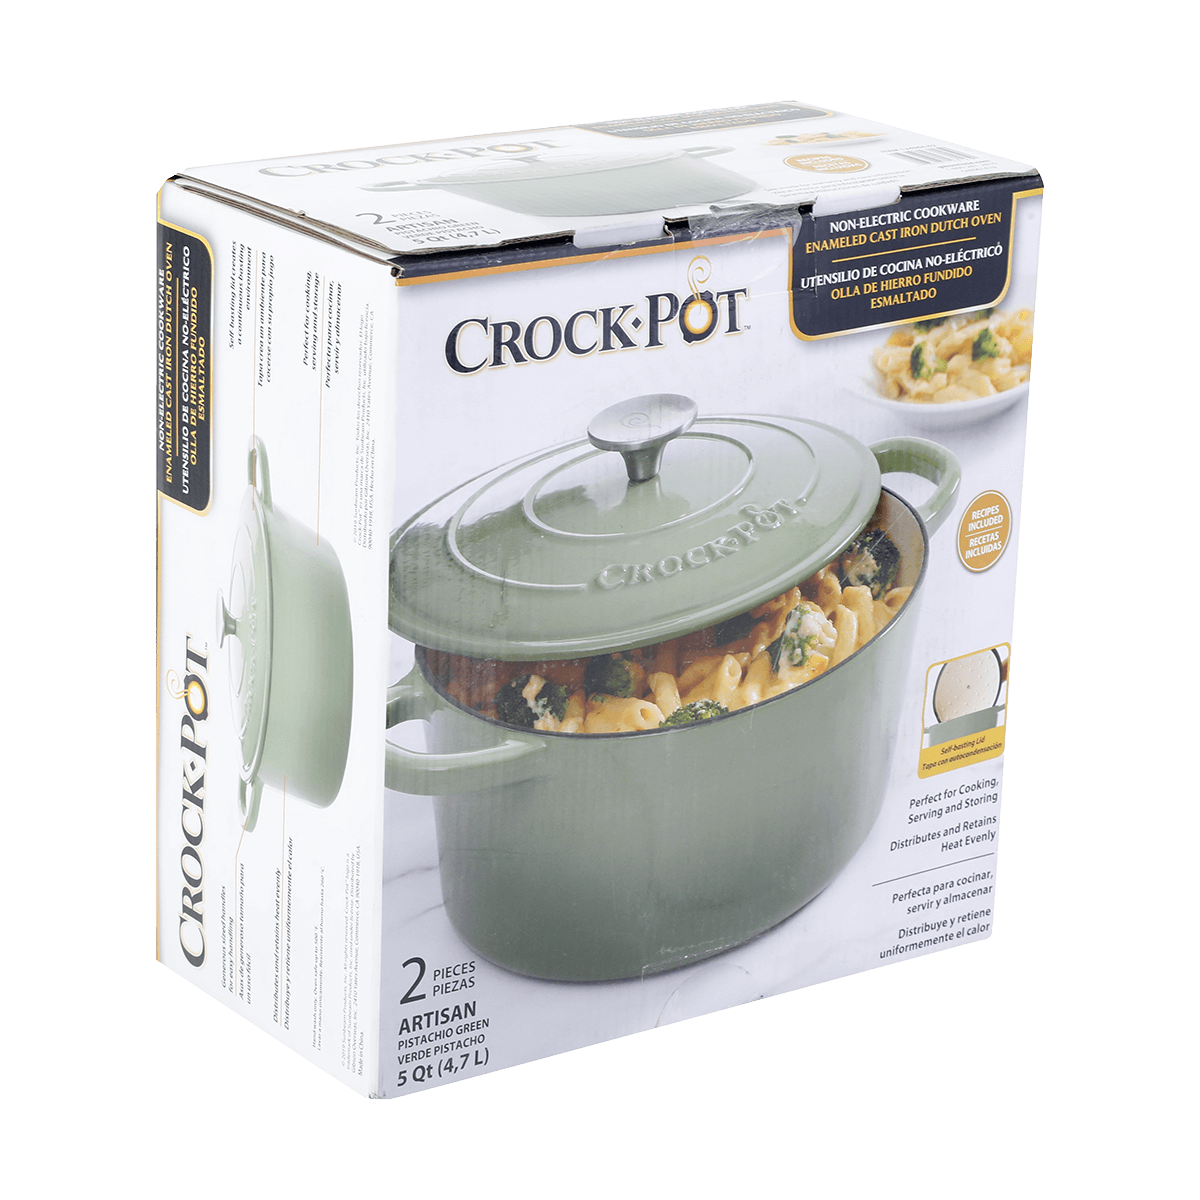 Crock-pot Artisan 2 Piece 5 -Quart Enameled Cast Iron Dutch Oven in Pistachio Green